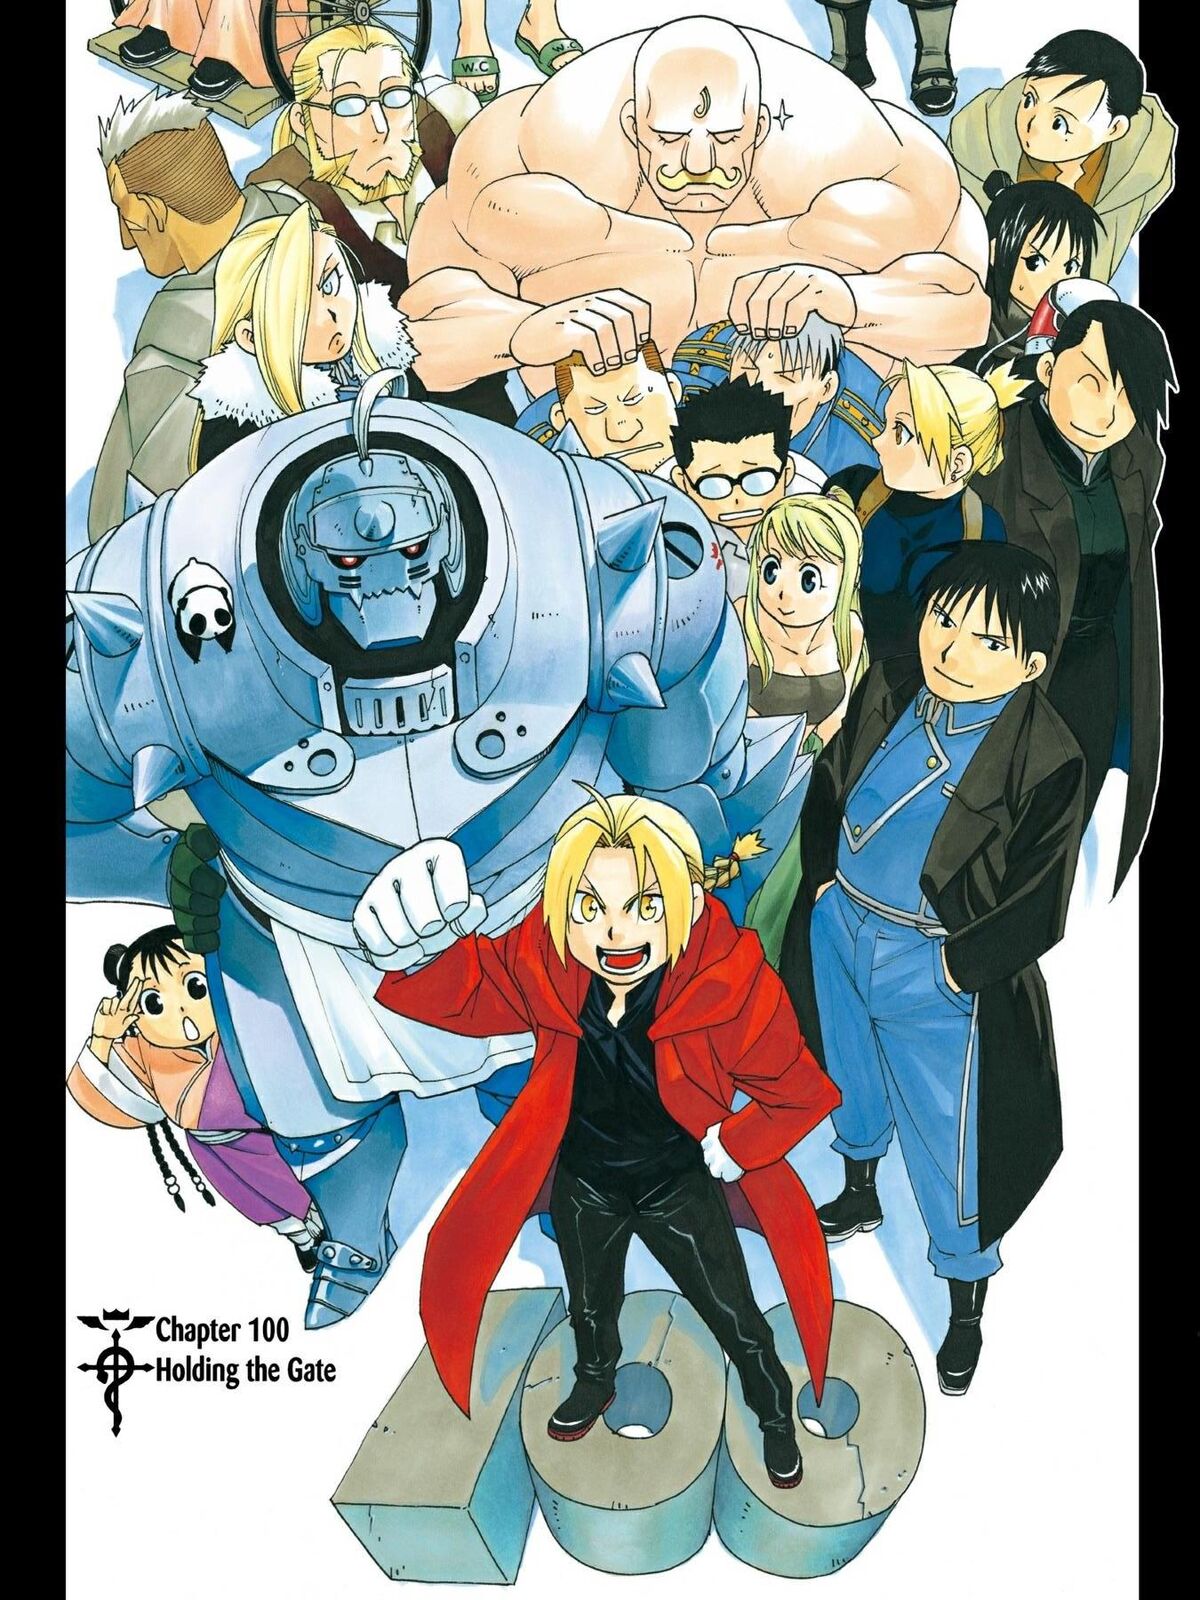 fullmetal-alchemist-series' tag wiki - Anime & Manga Stack Exchange